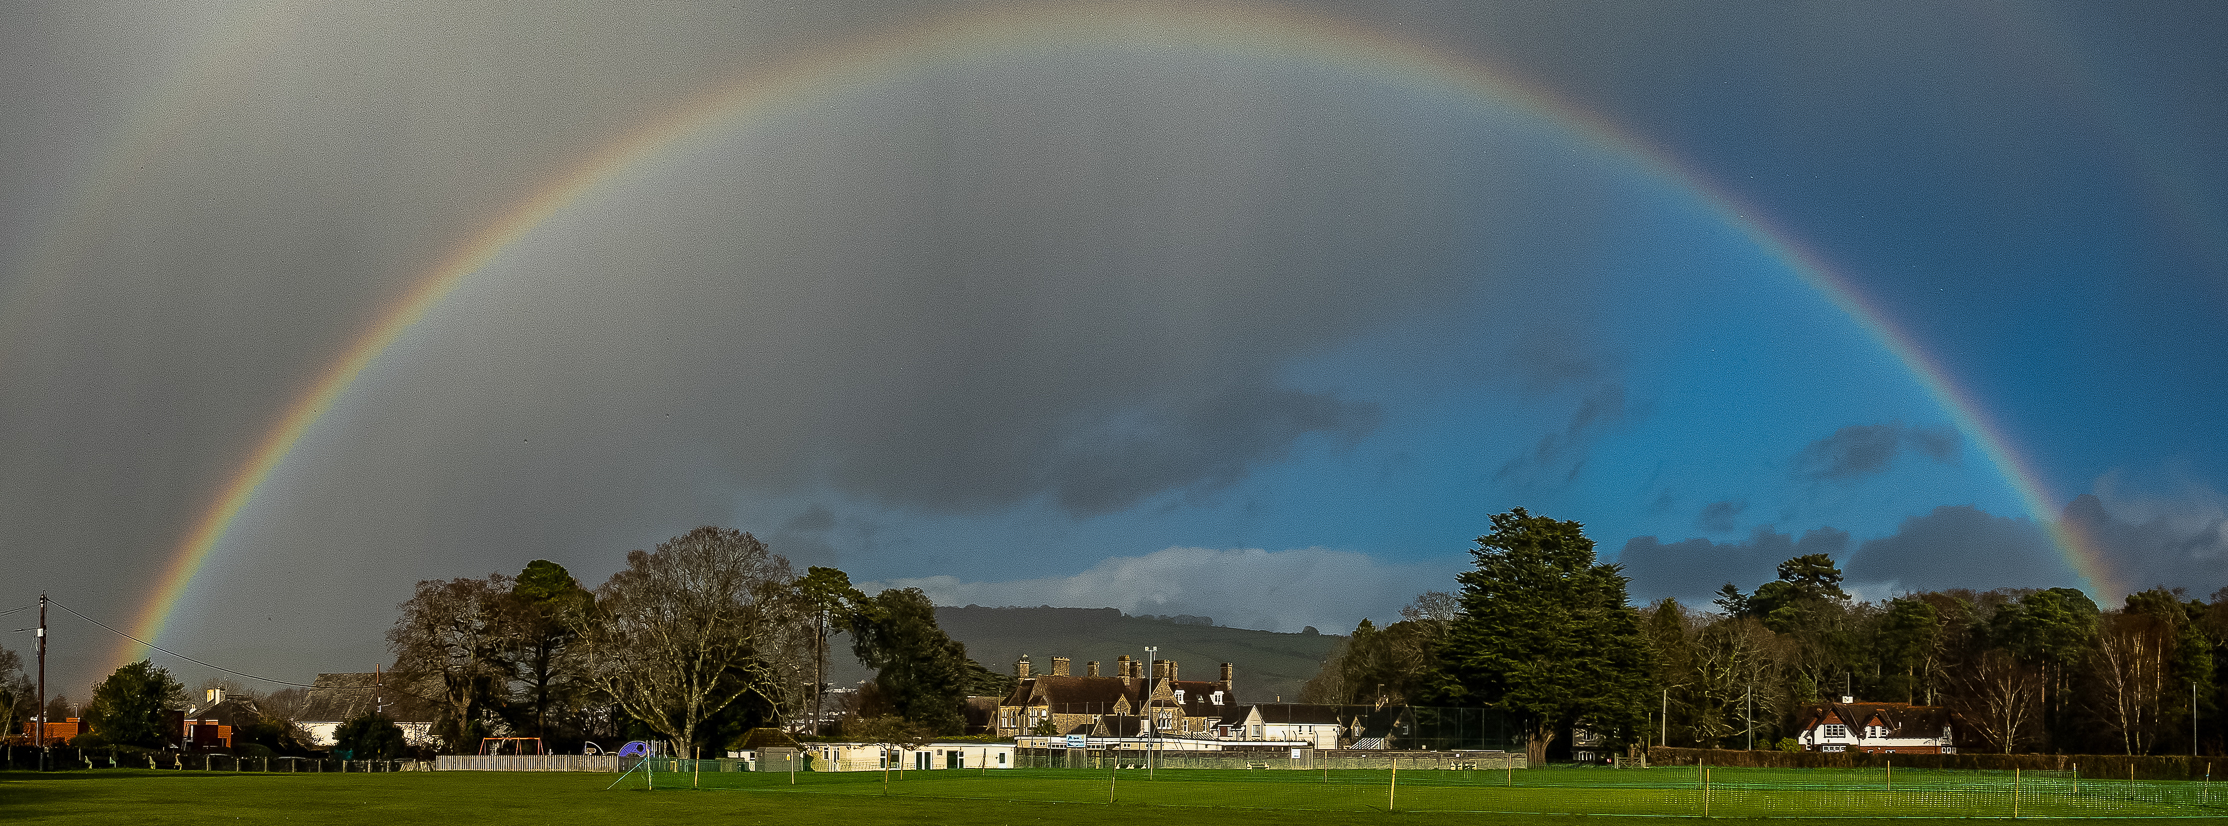 Rainbow over Bovey Tracey Cricket Club ground